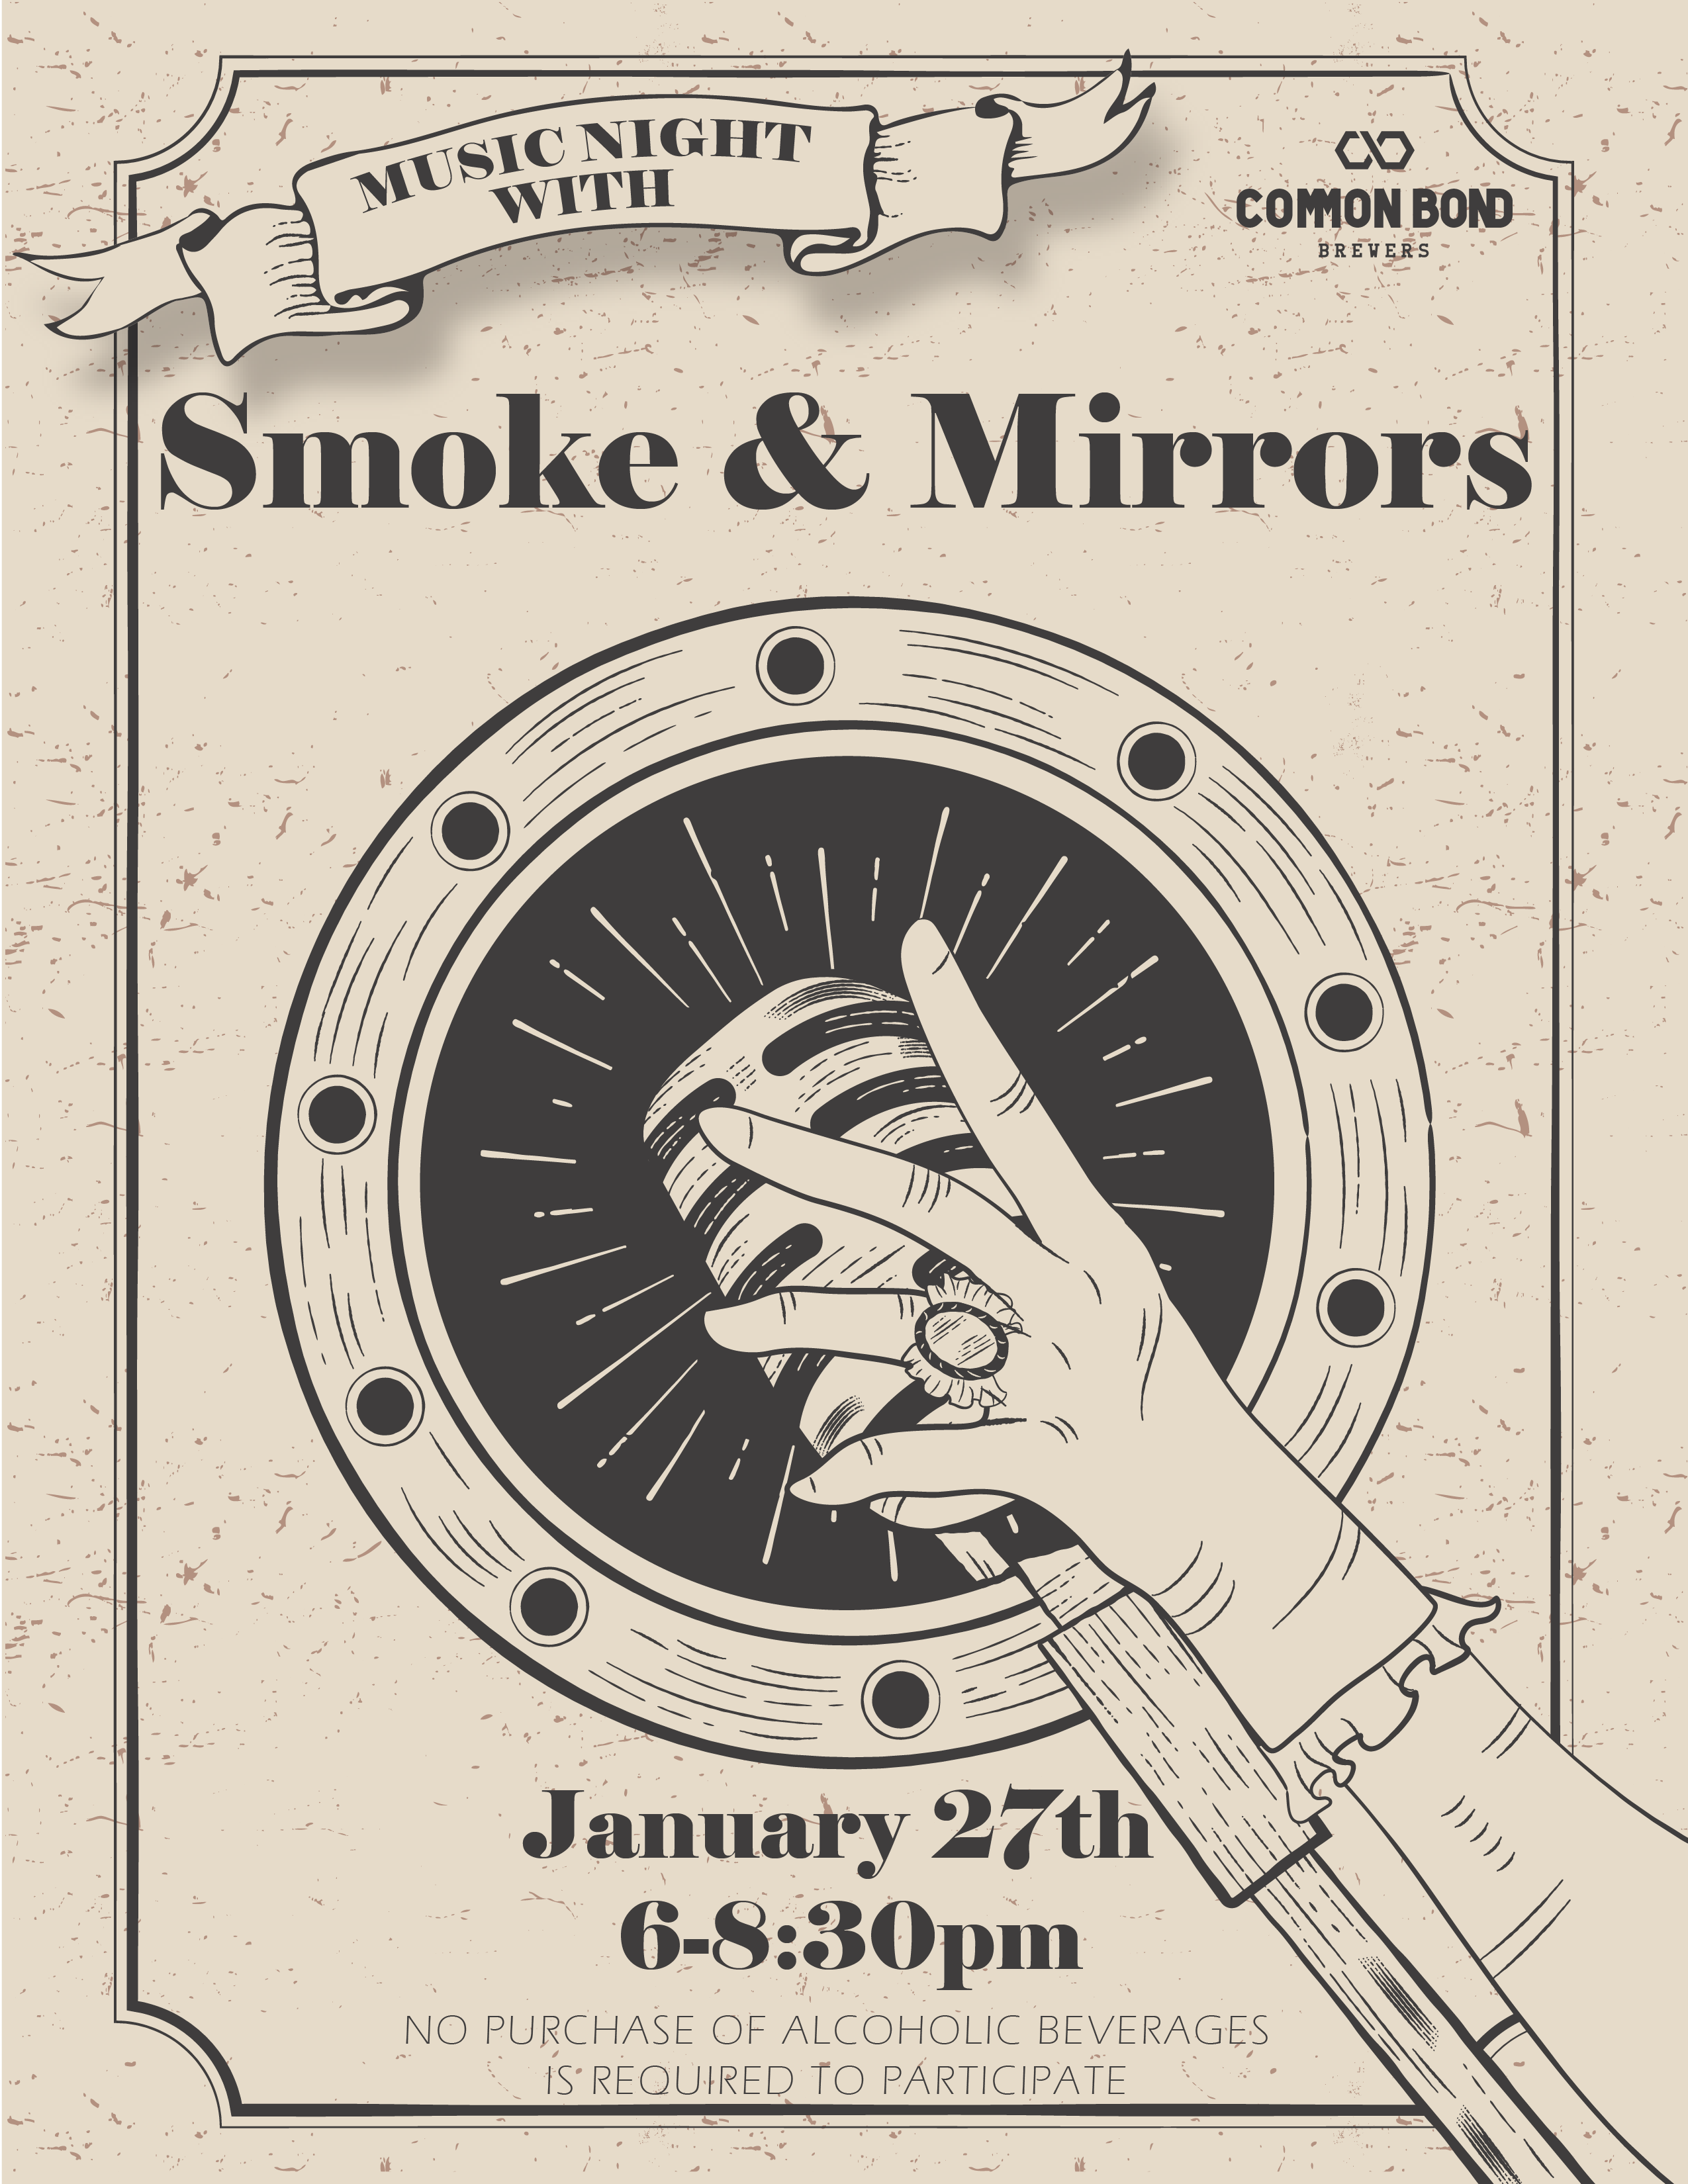 Music Night with Smoke & Mirrors